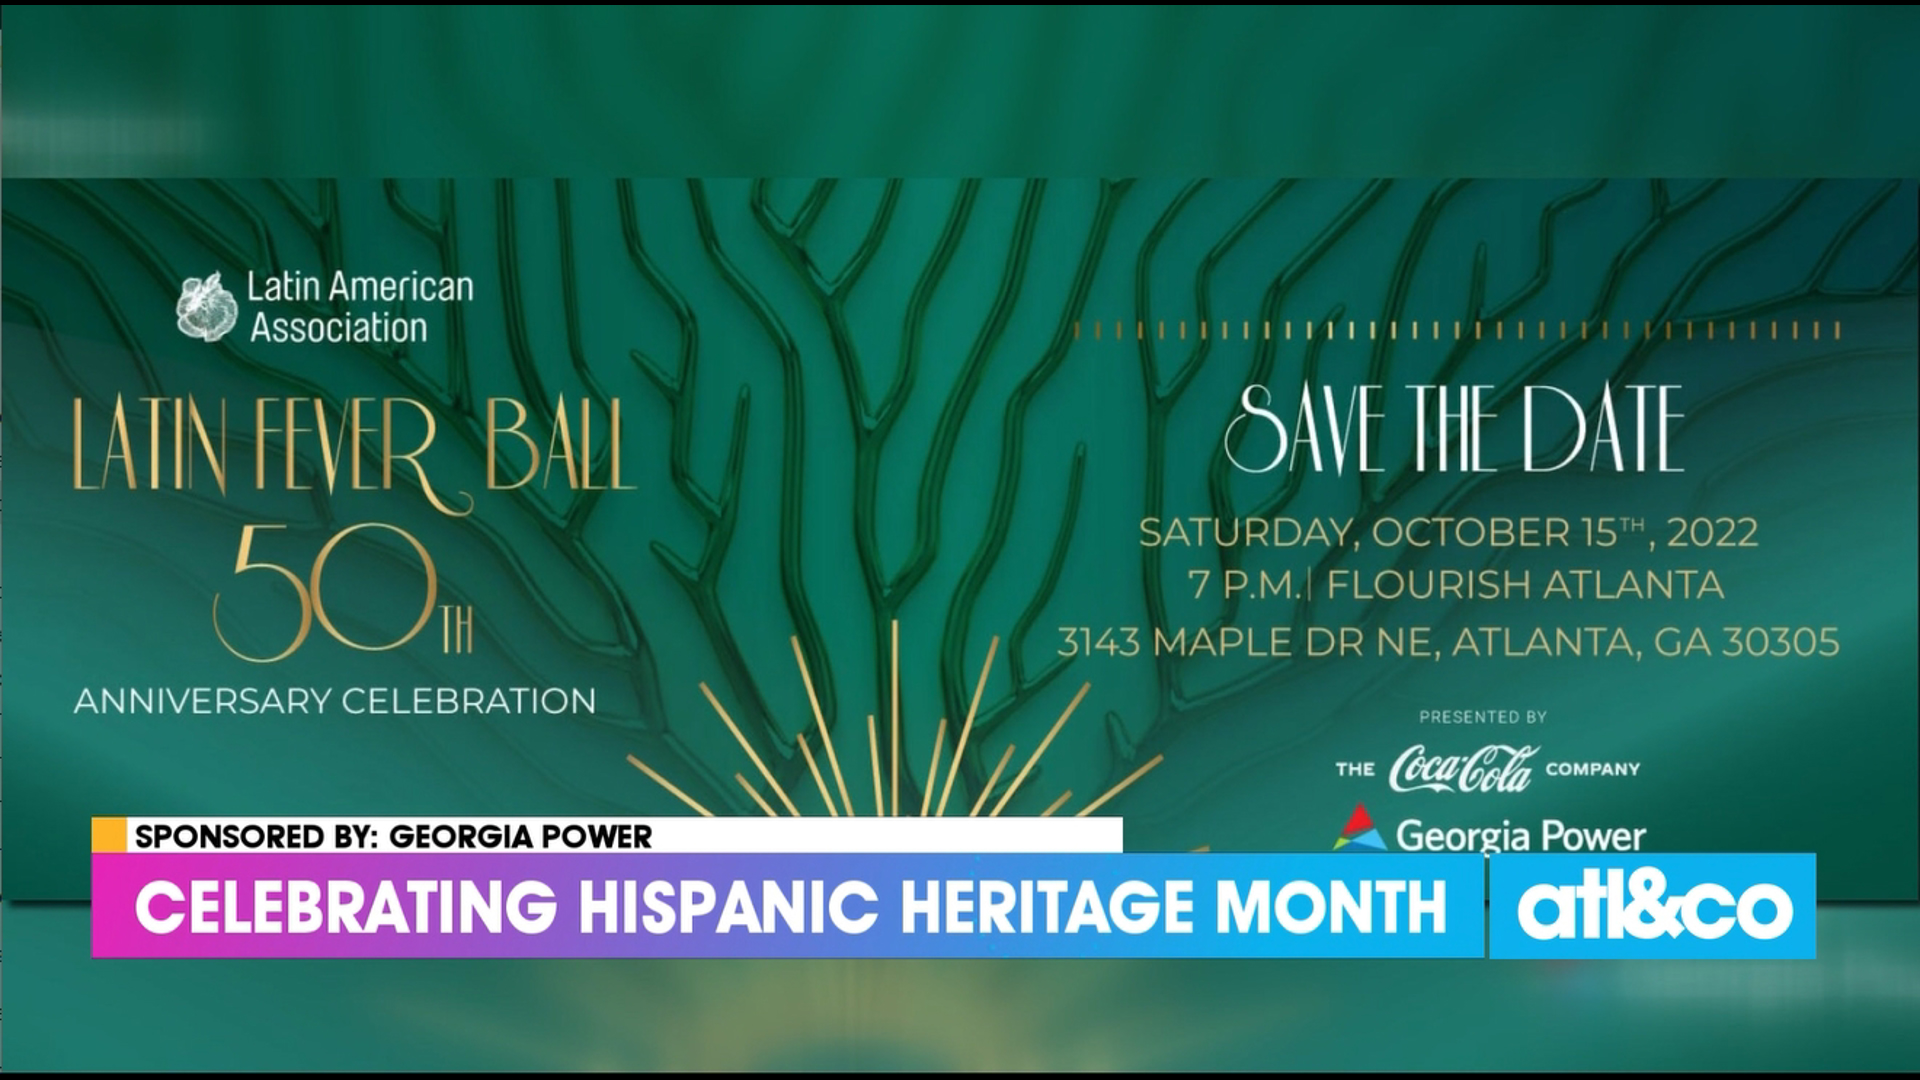 Georgia Power celebrates Hispanic Heritage Month with the Latin American Association!